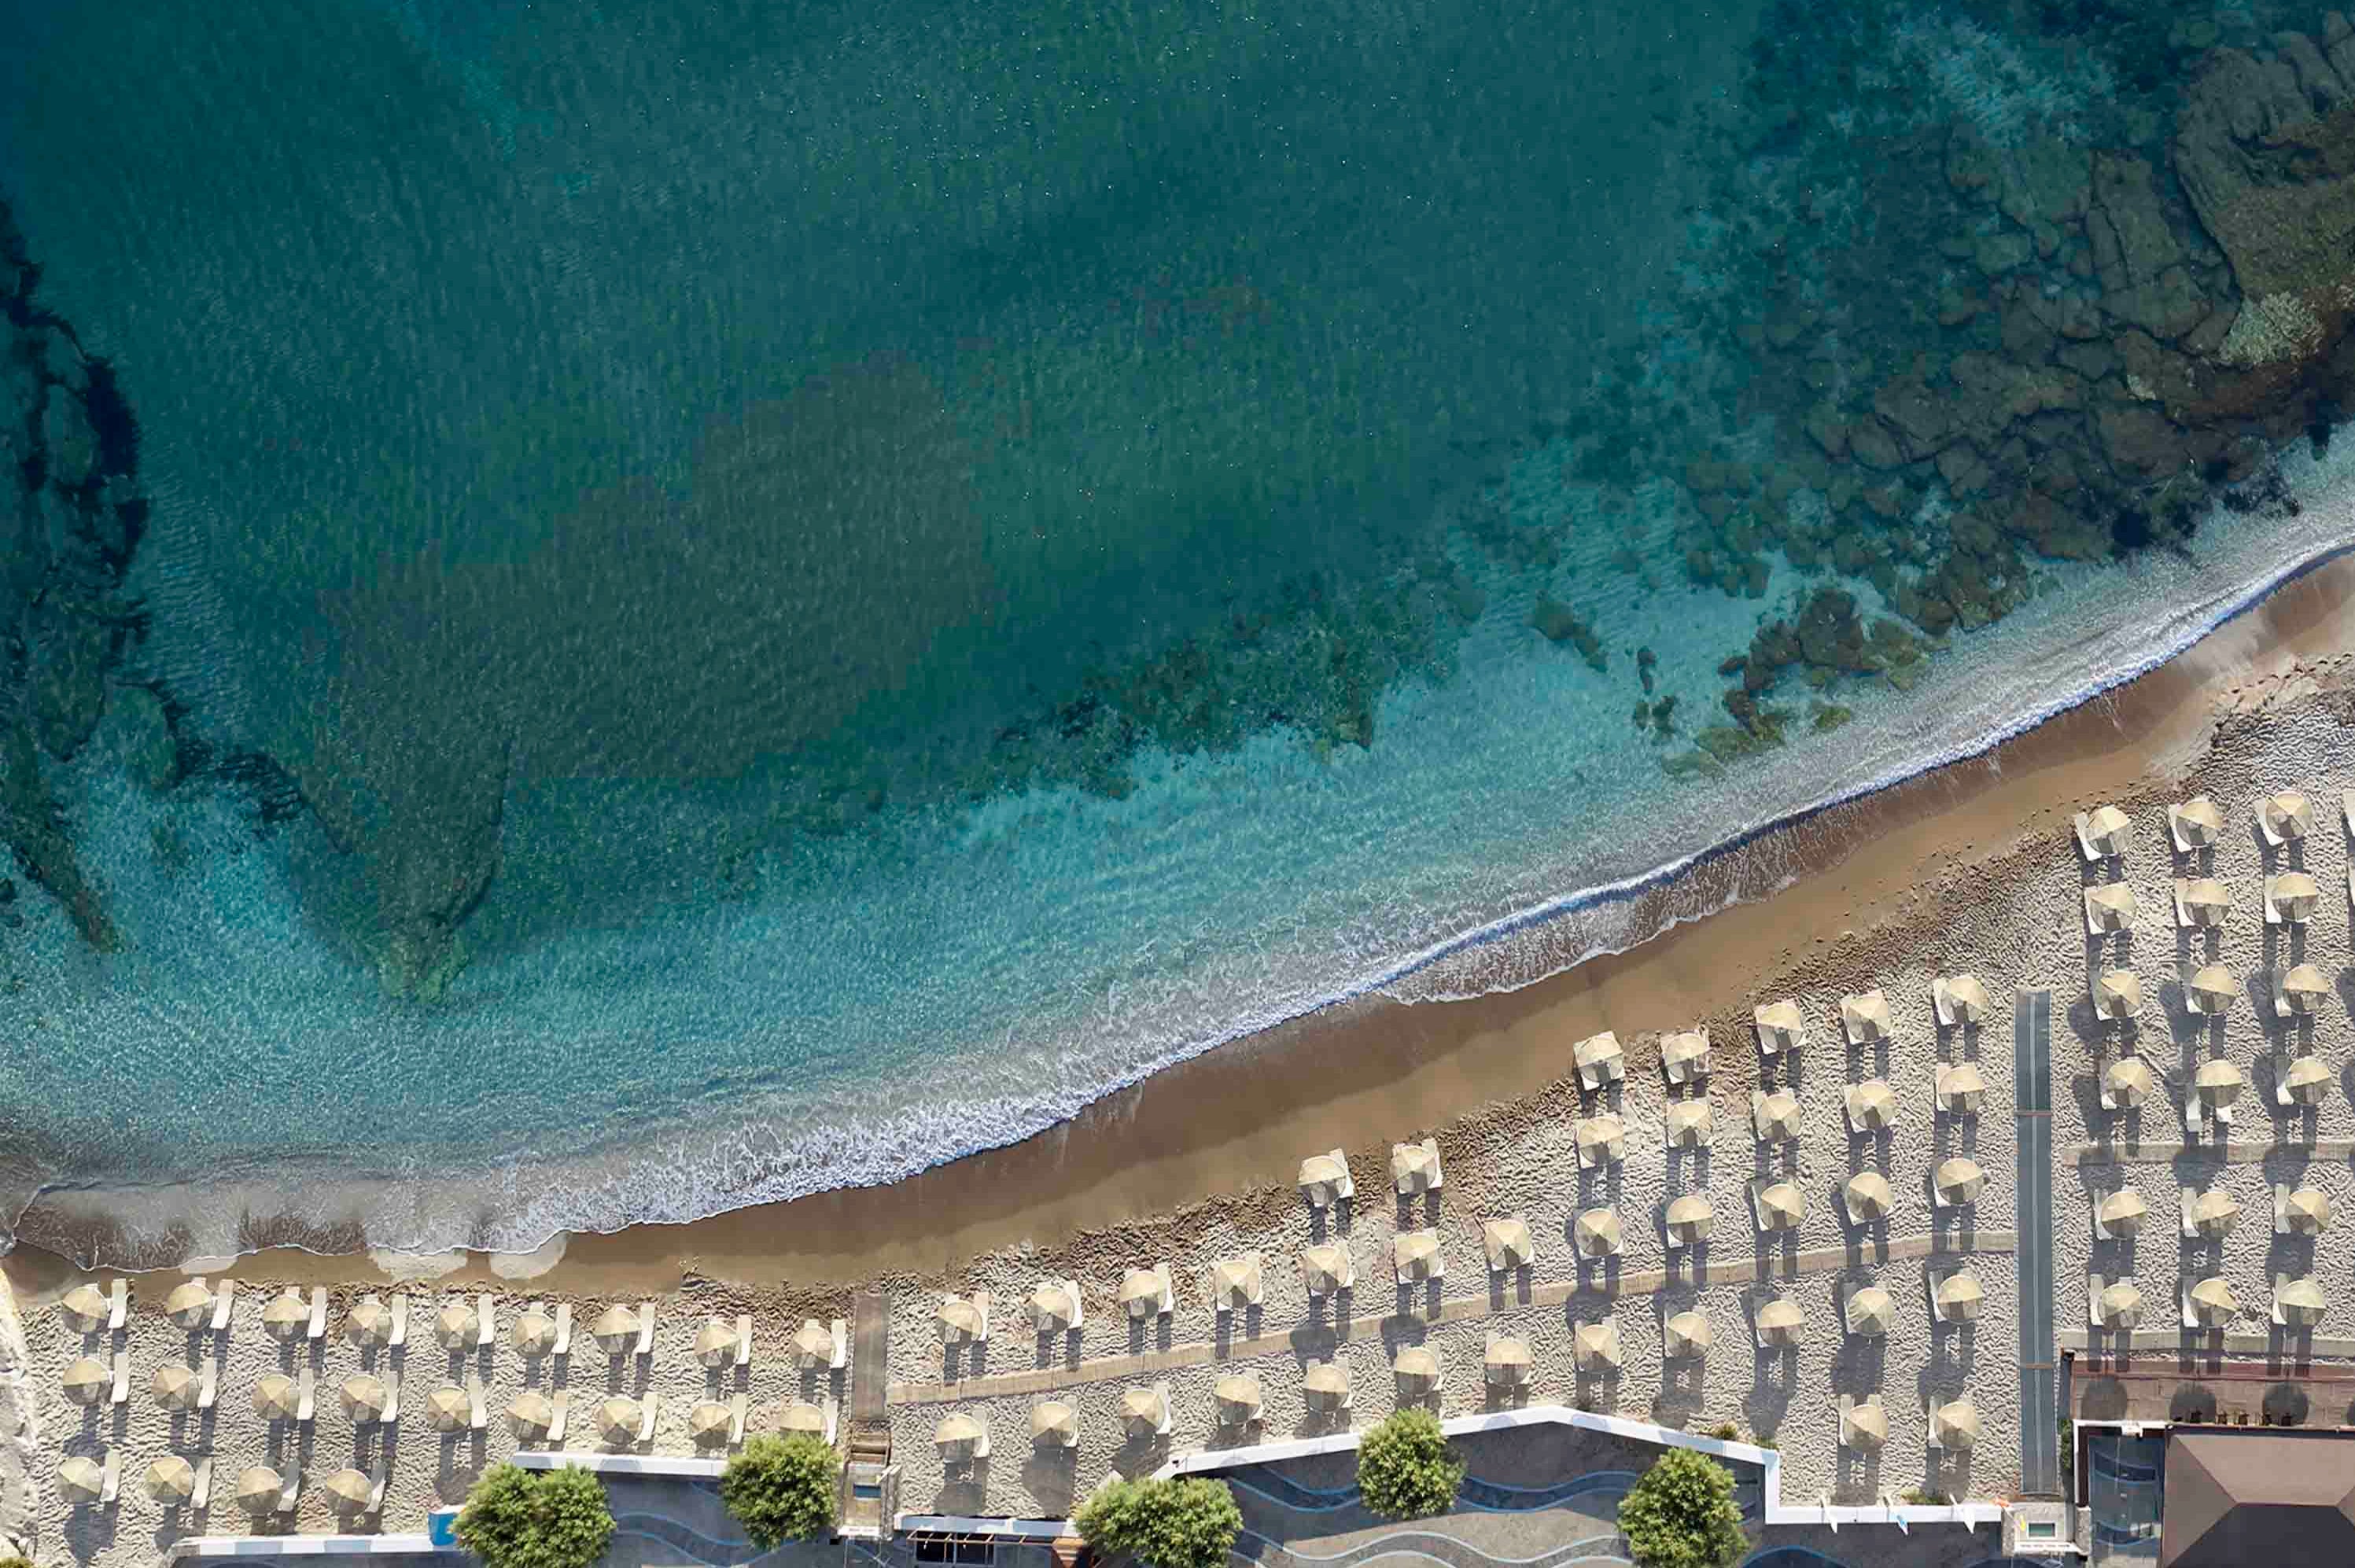 Creta Maris resort opens up onto a pebble and sand beach